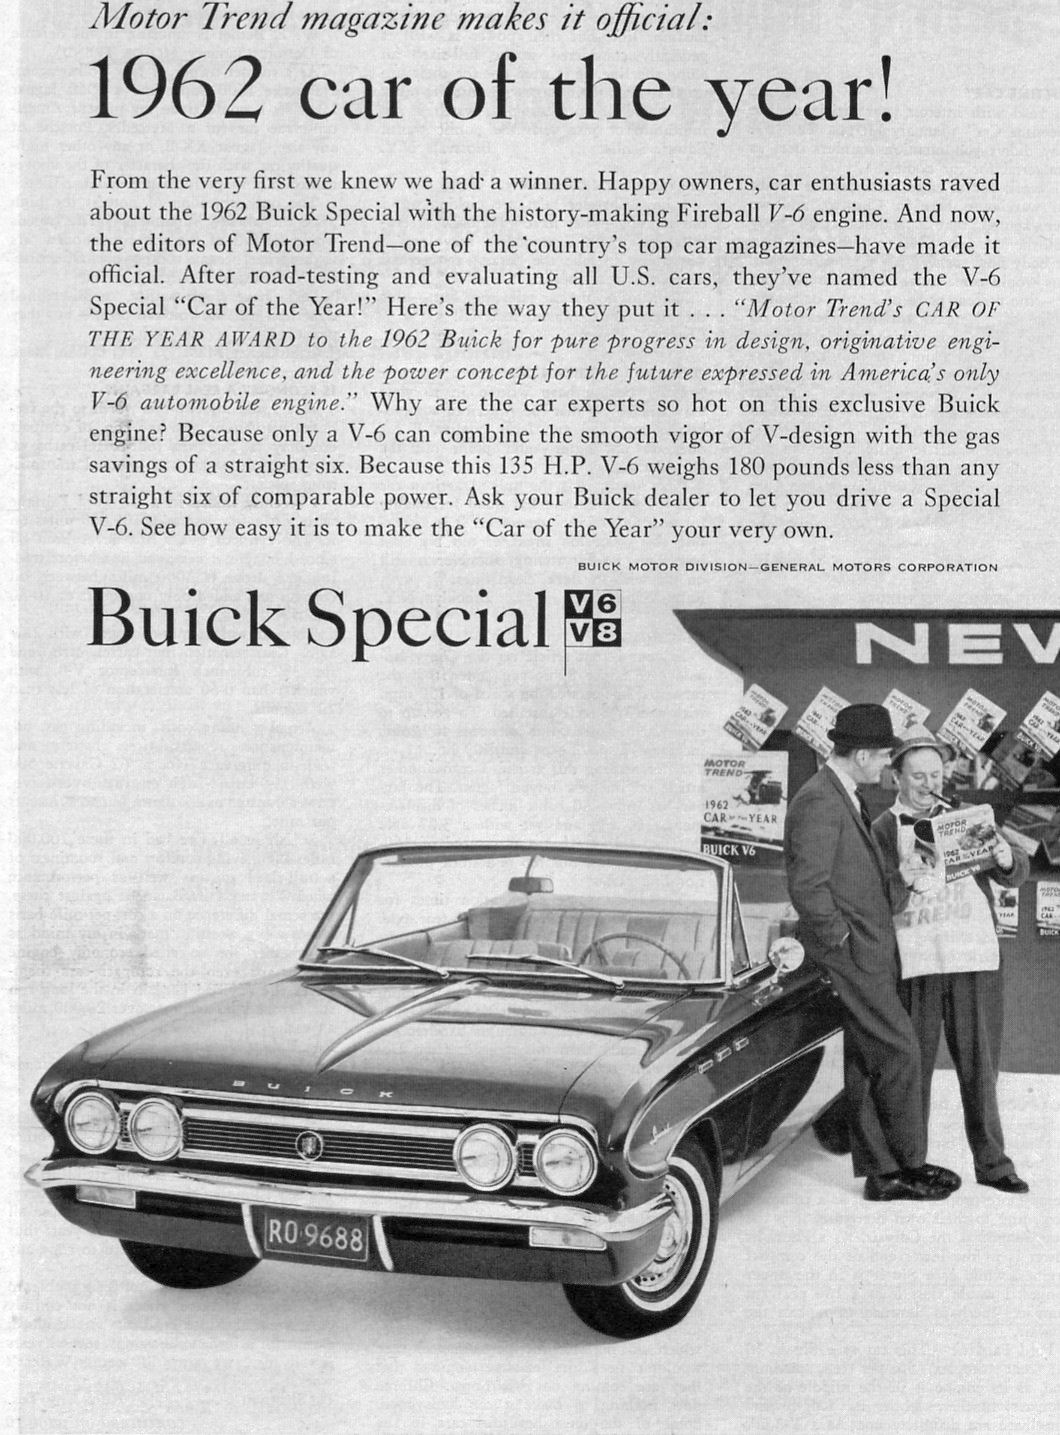 1962 Buick Ad-07